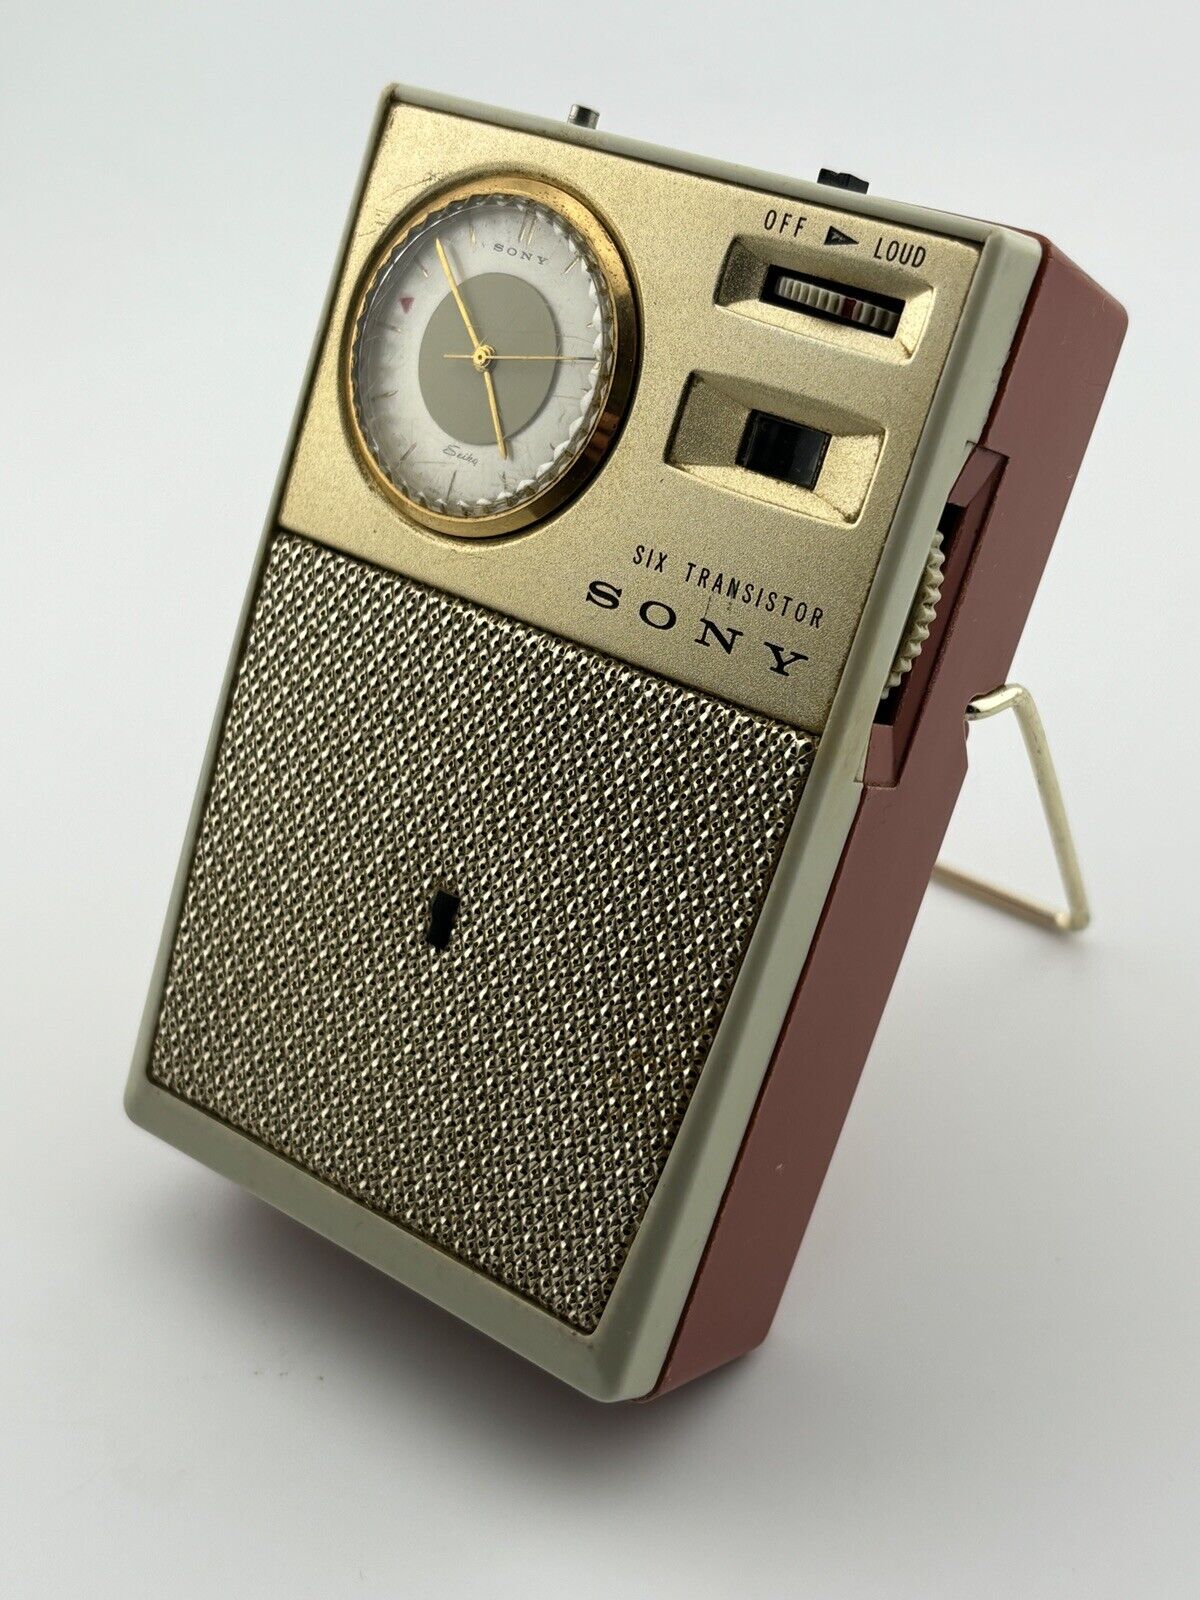 SONY TRW-621 Transistor Radio RARE 6 Transistor Super Het. JAPAN Seiko Clock